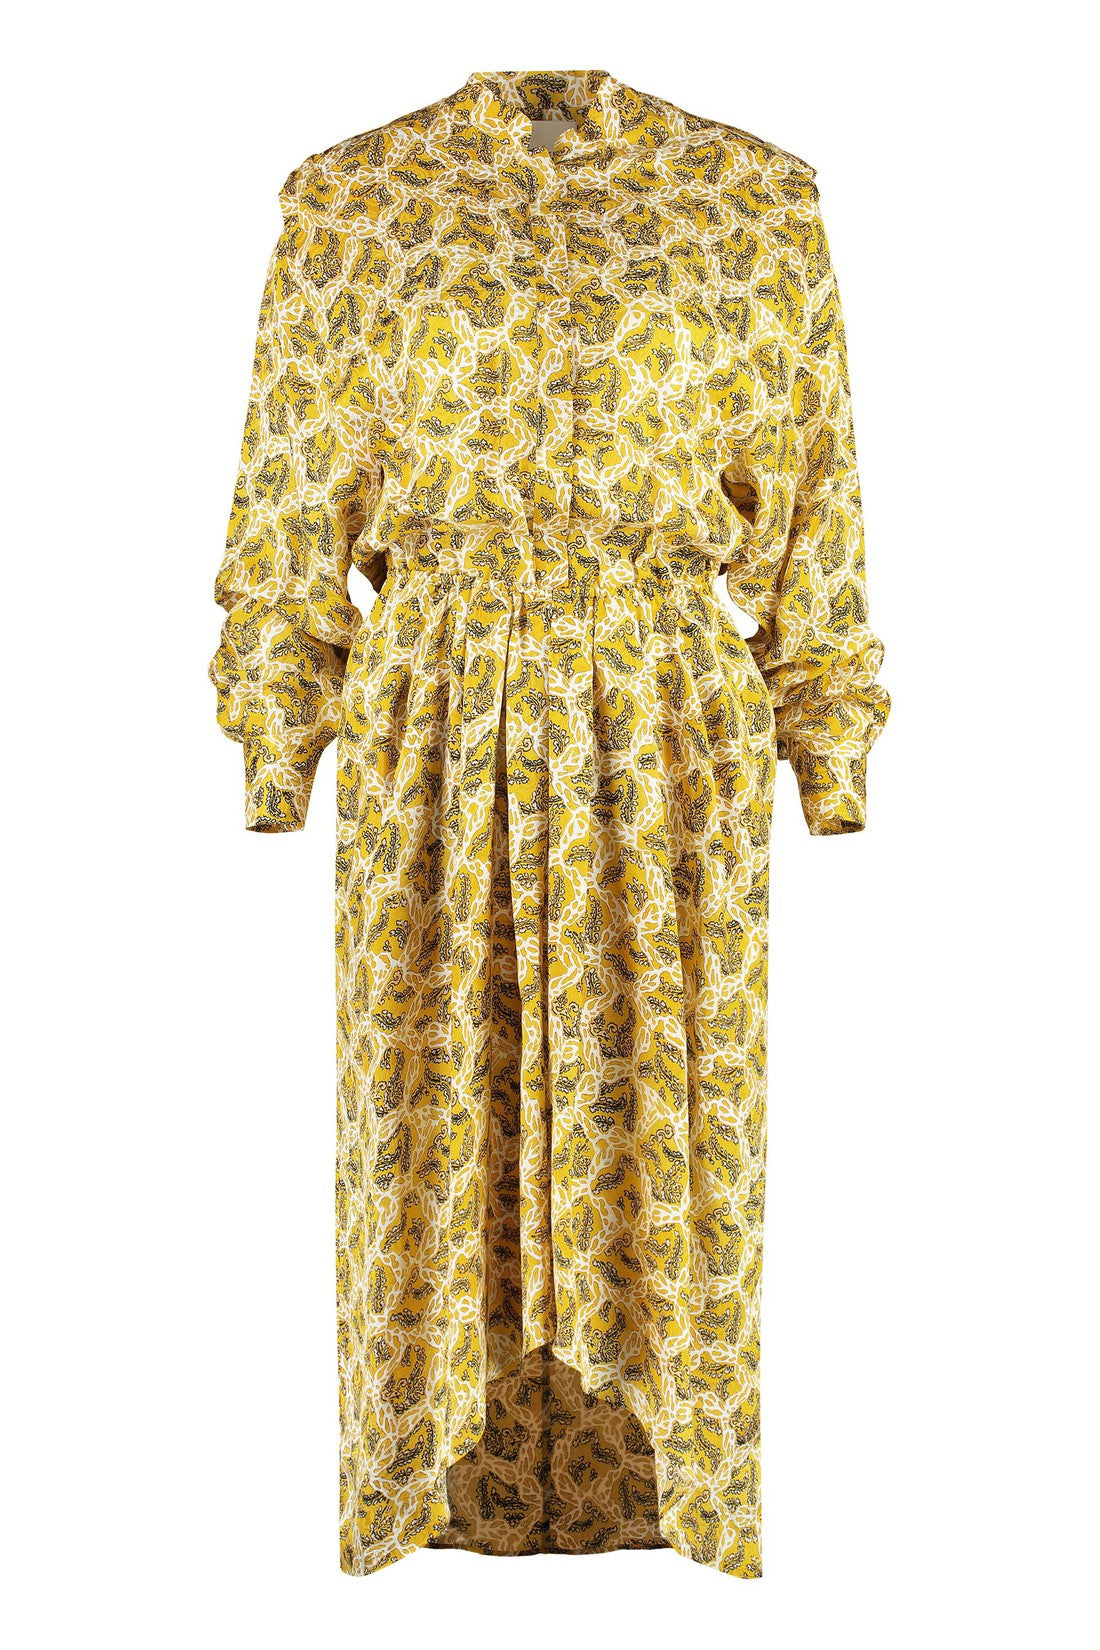 Isabel Marant-OUTLET-SALE-Lokeya Printed dress-ARCHIVIST